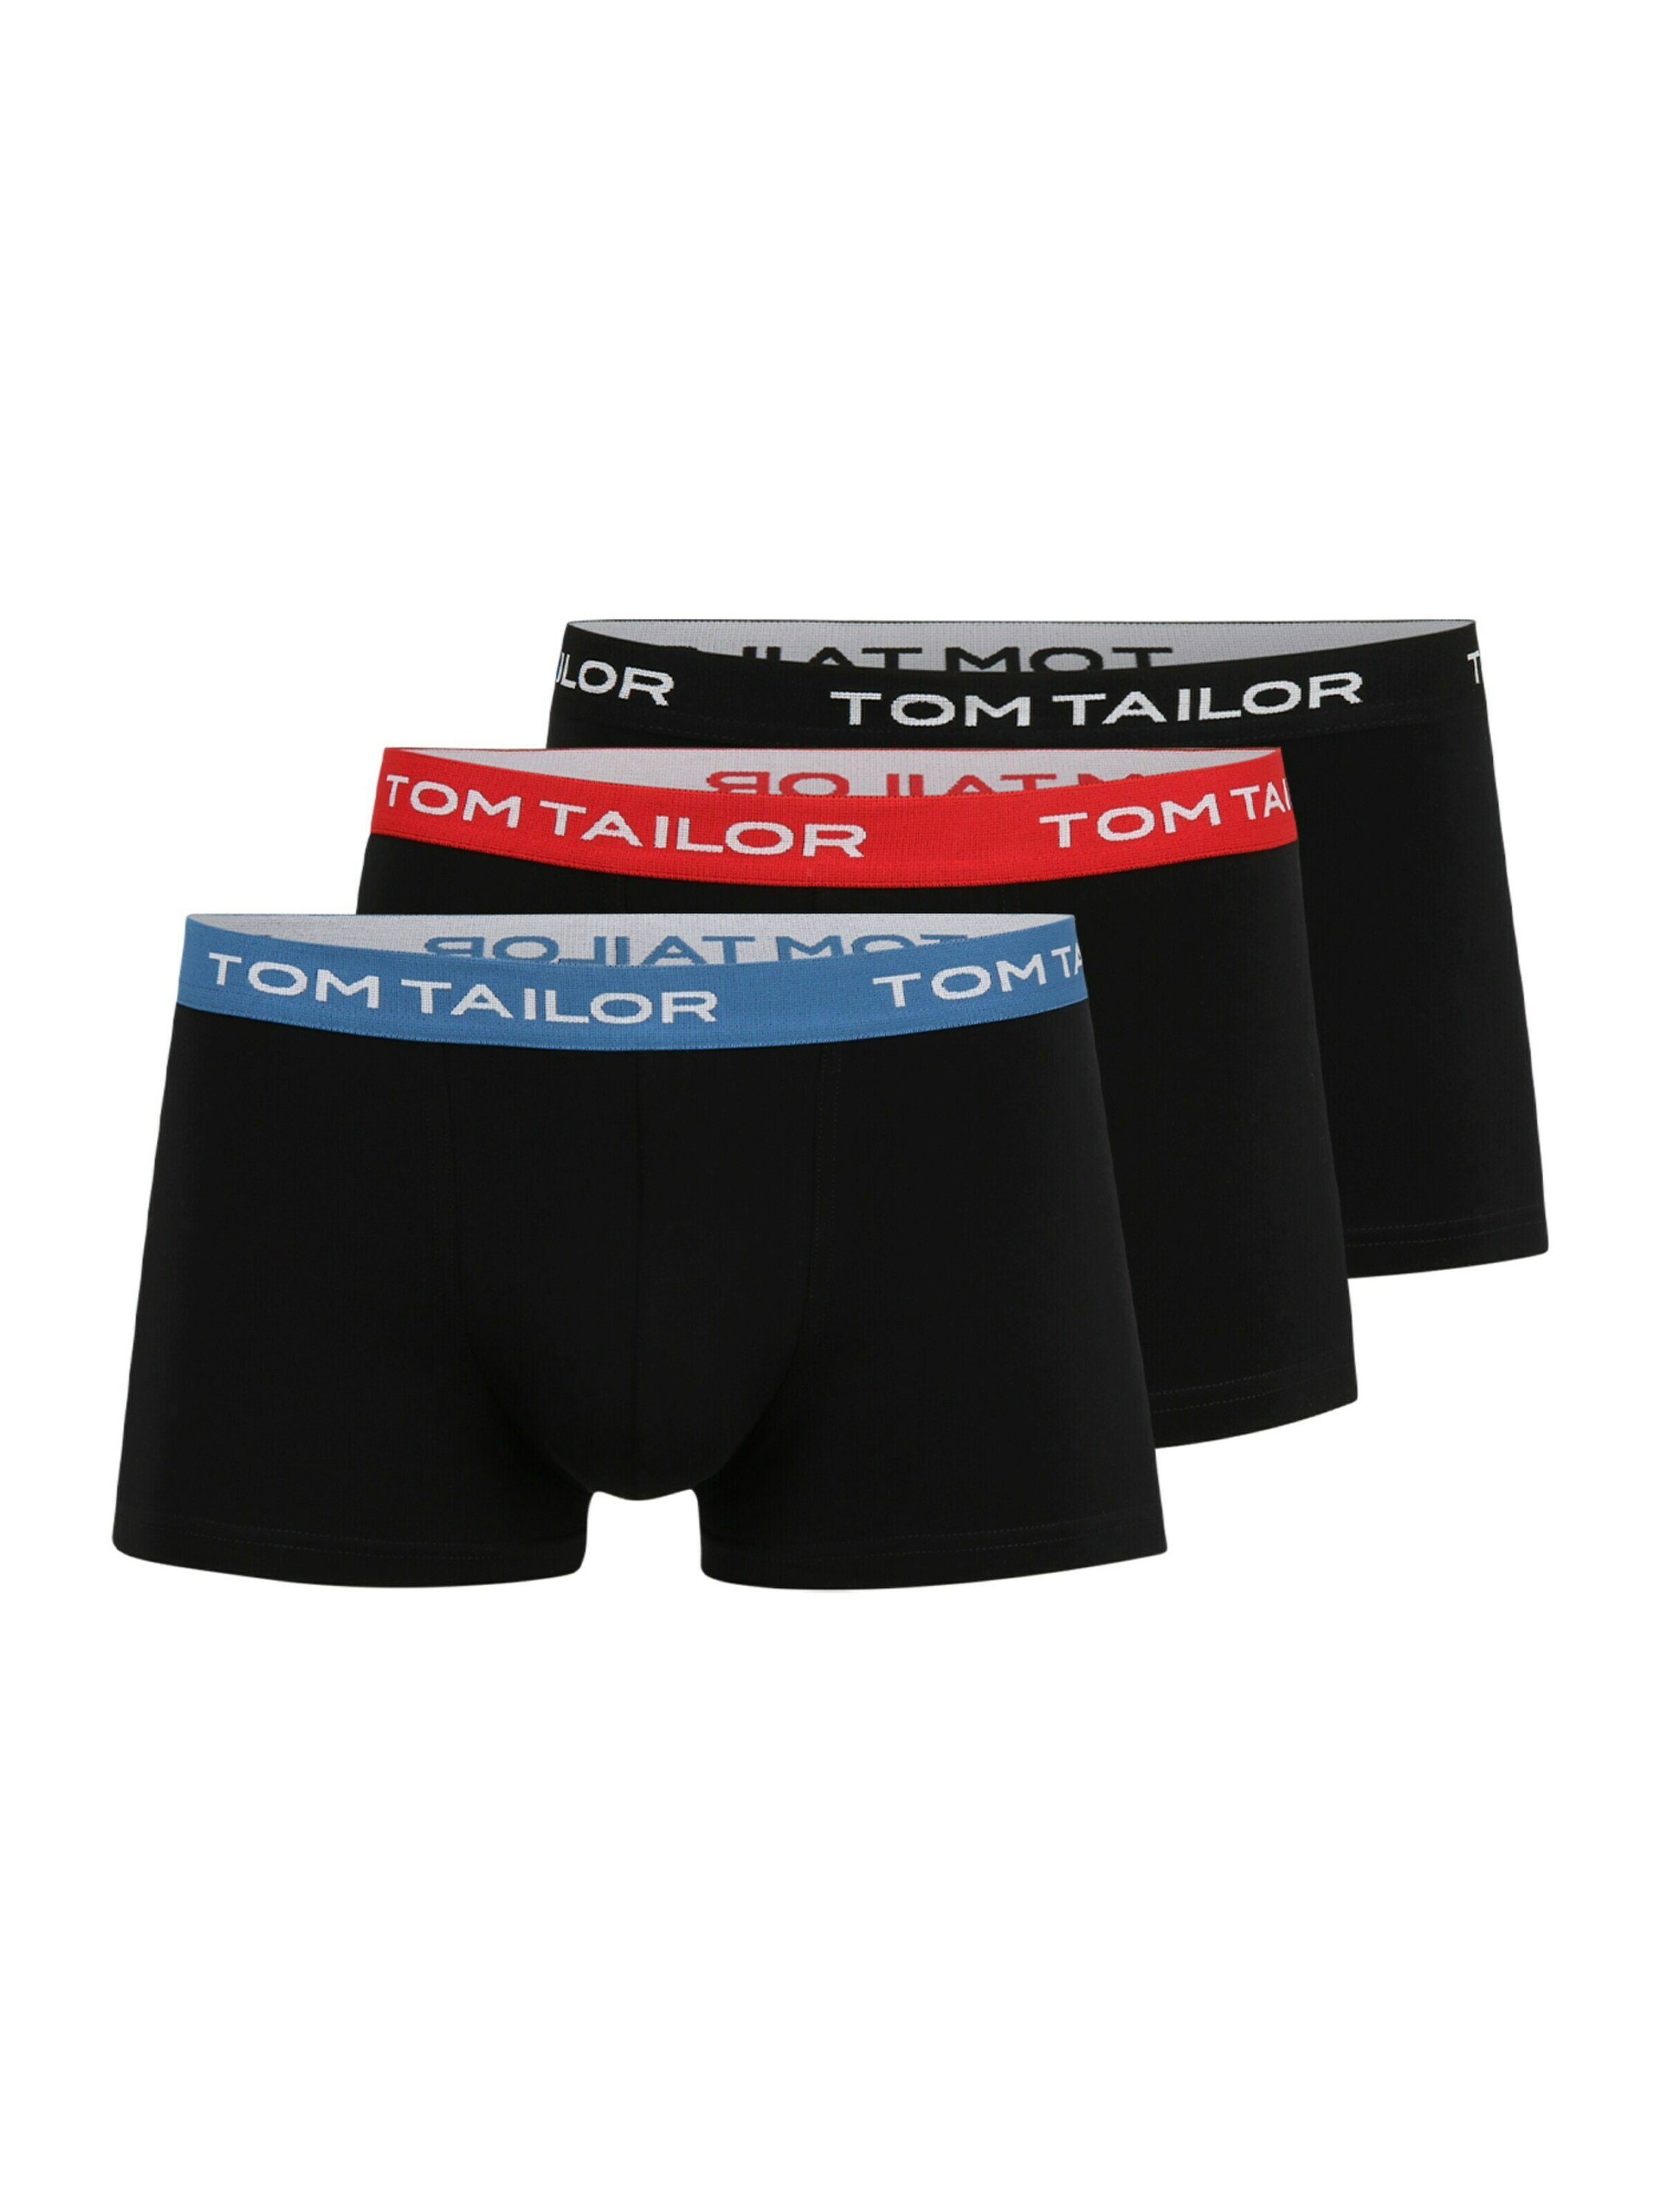 TAILOR Boxershorts (3-St) TOM schwarz-dunkel-uni